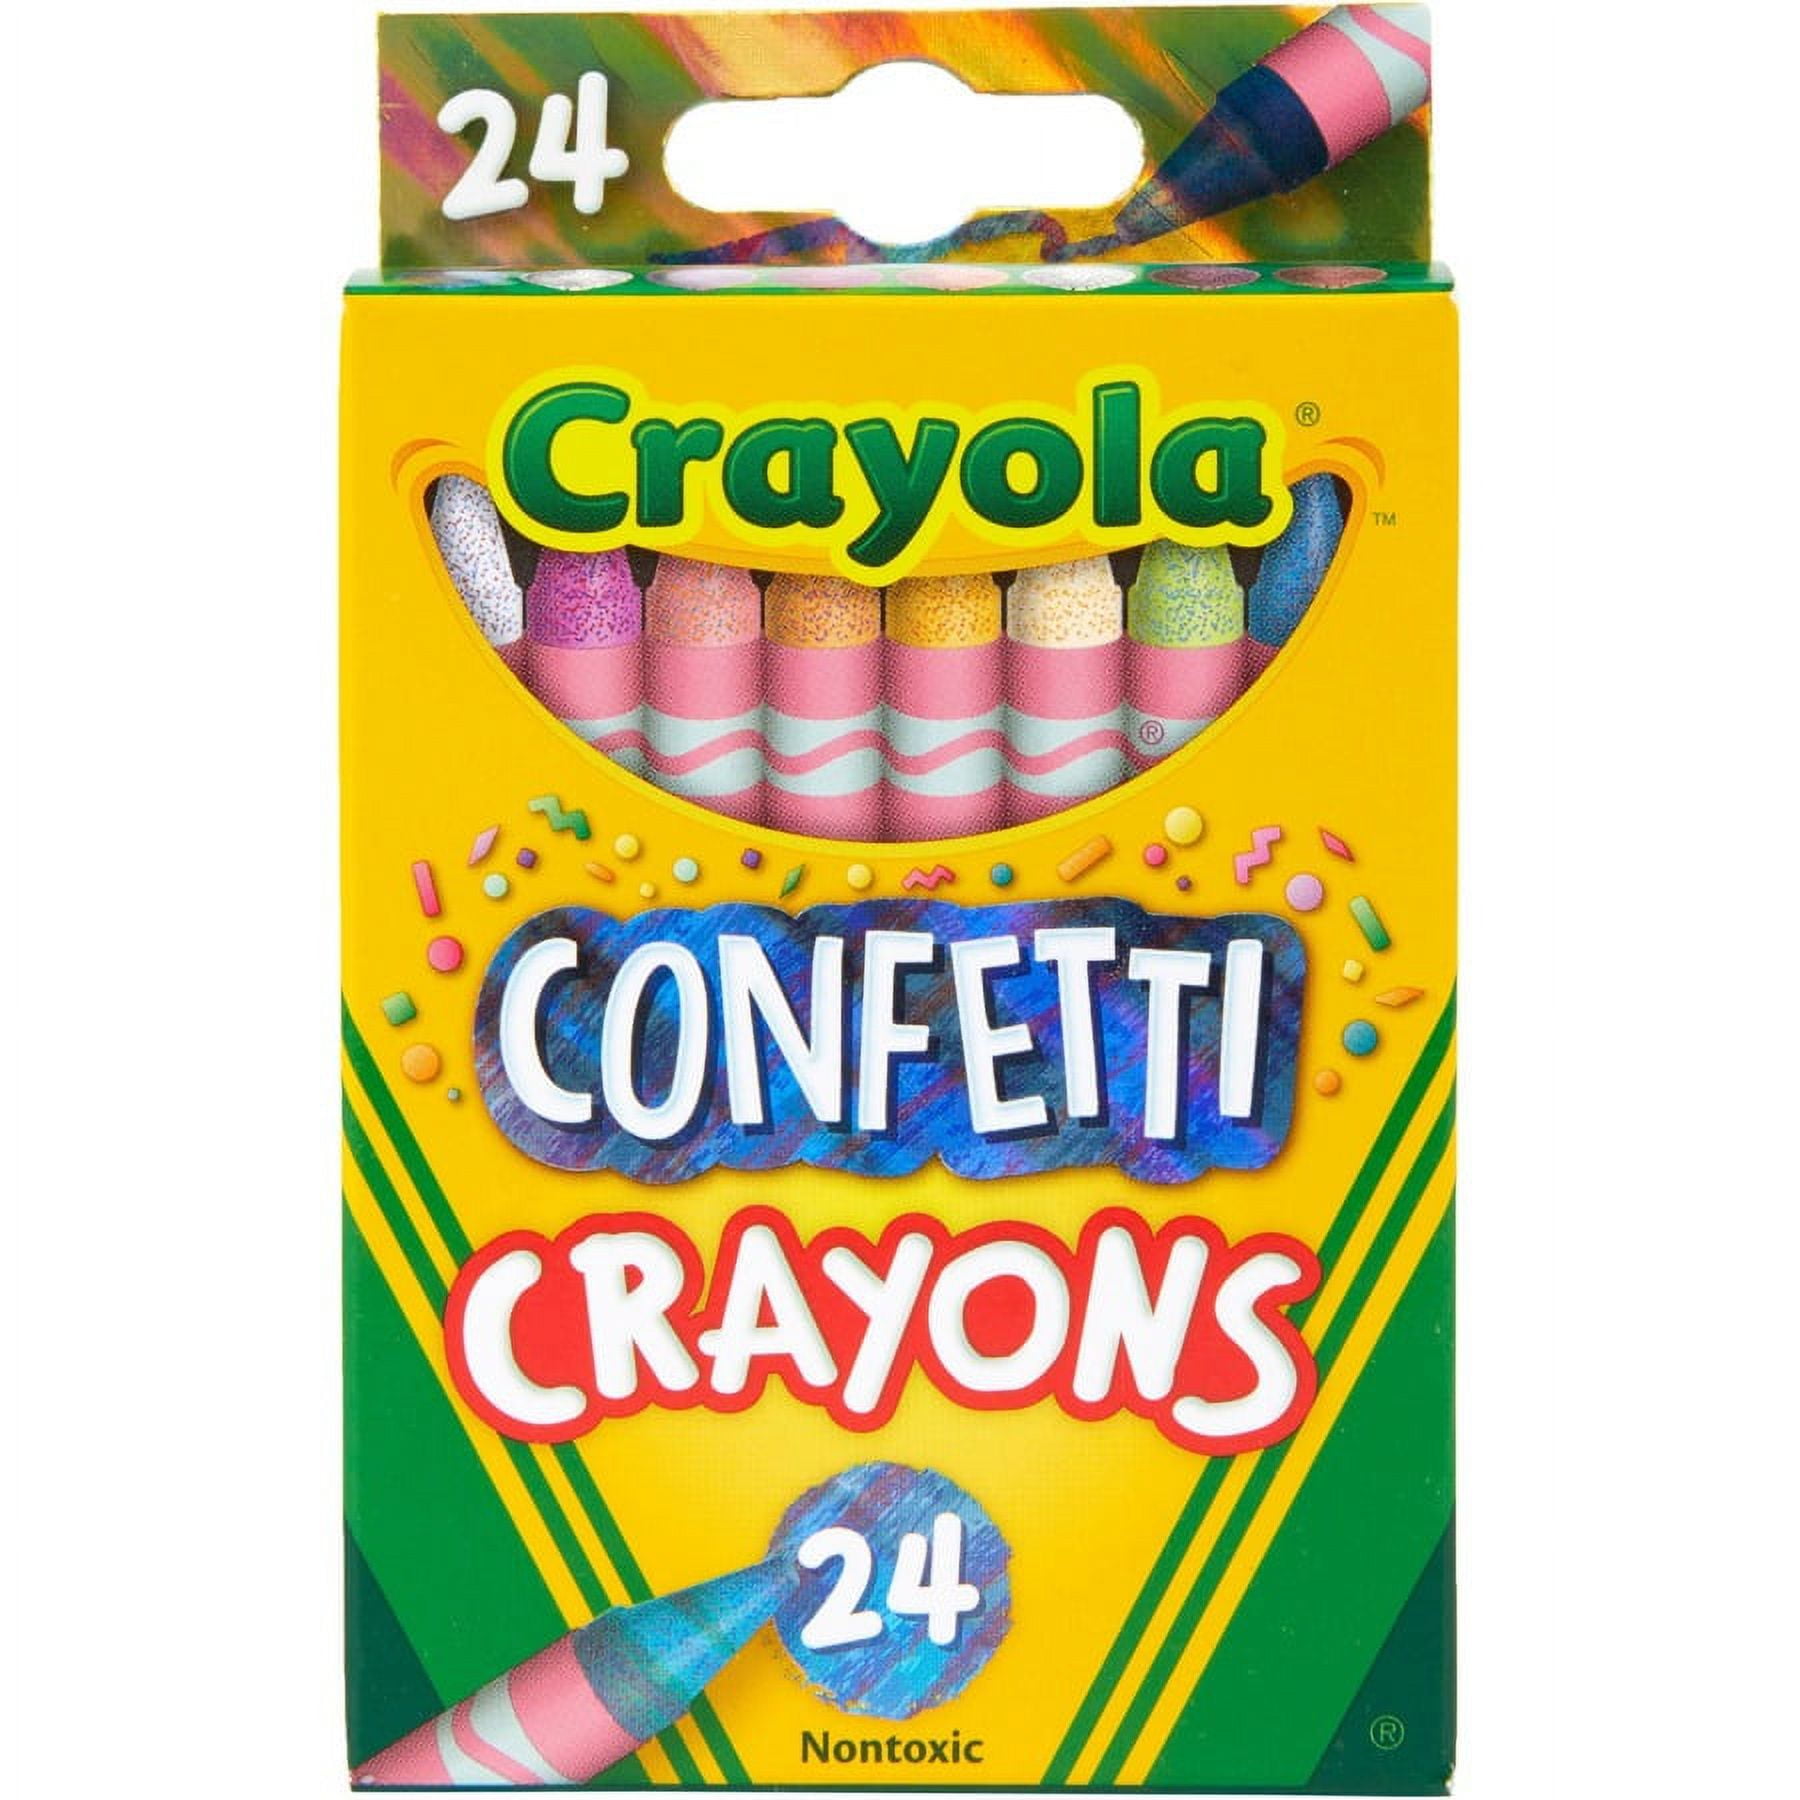 Crayola Creativity Tub, Art Set, 102 Pcs, Toys for Kids, Creative